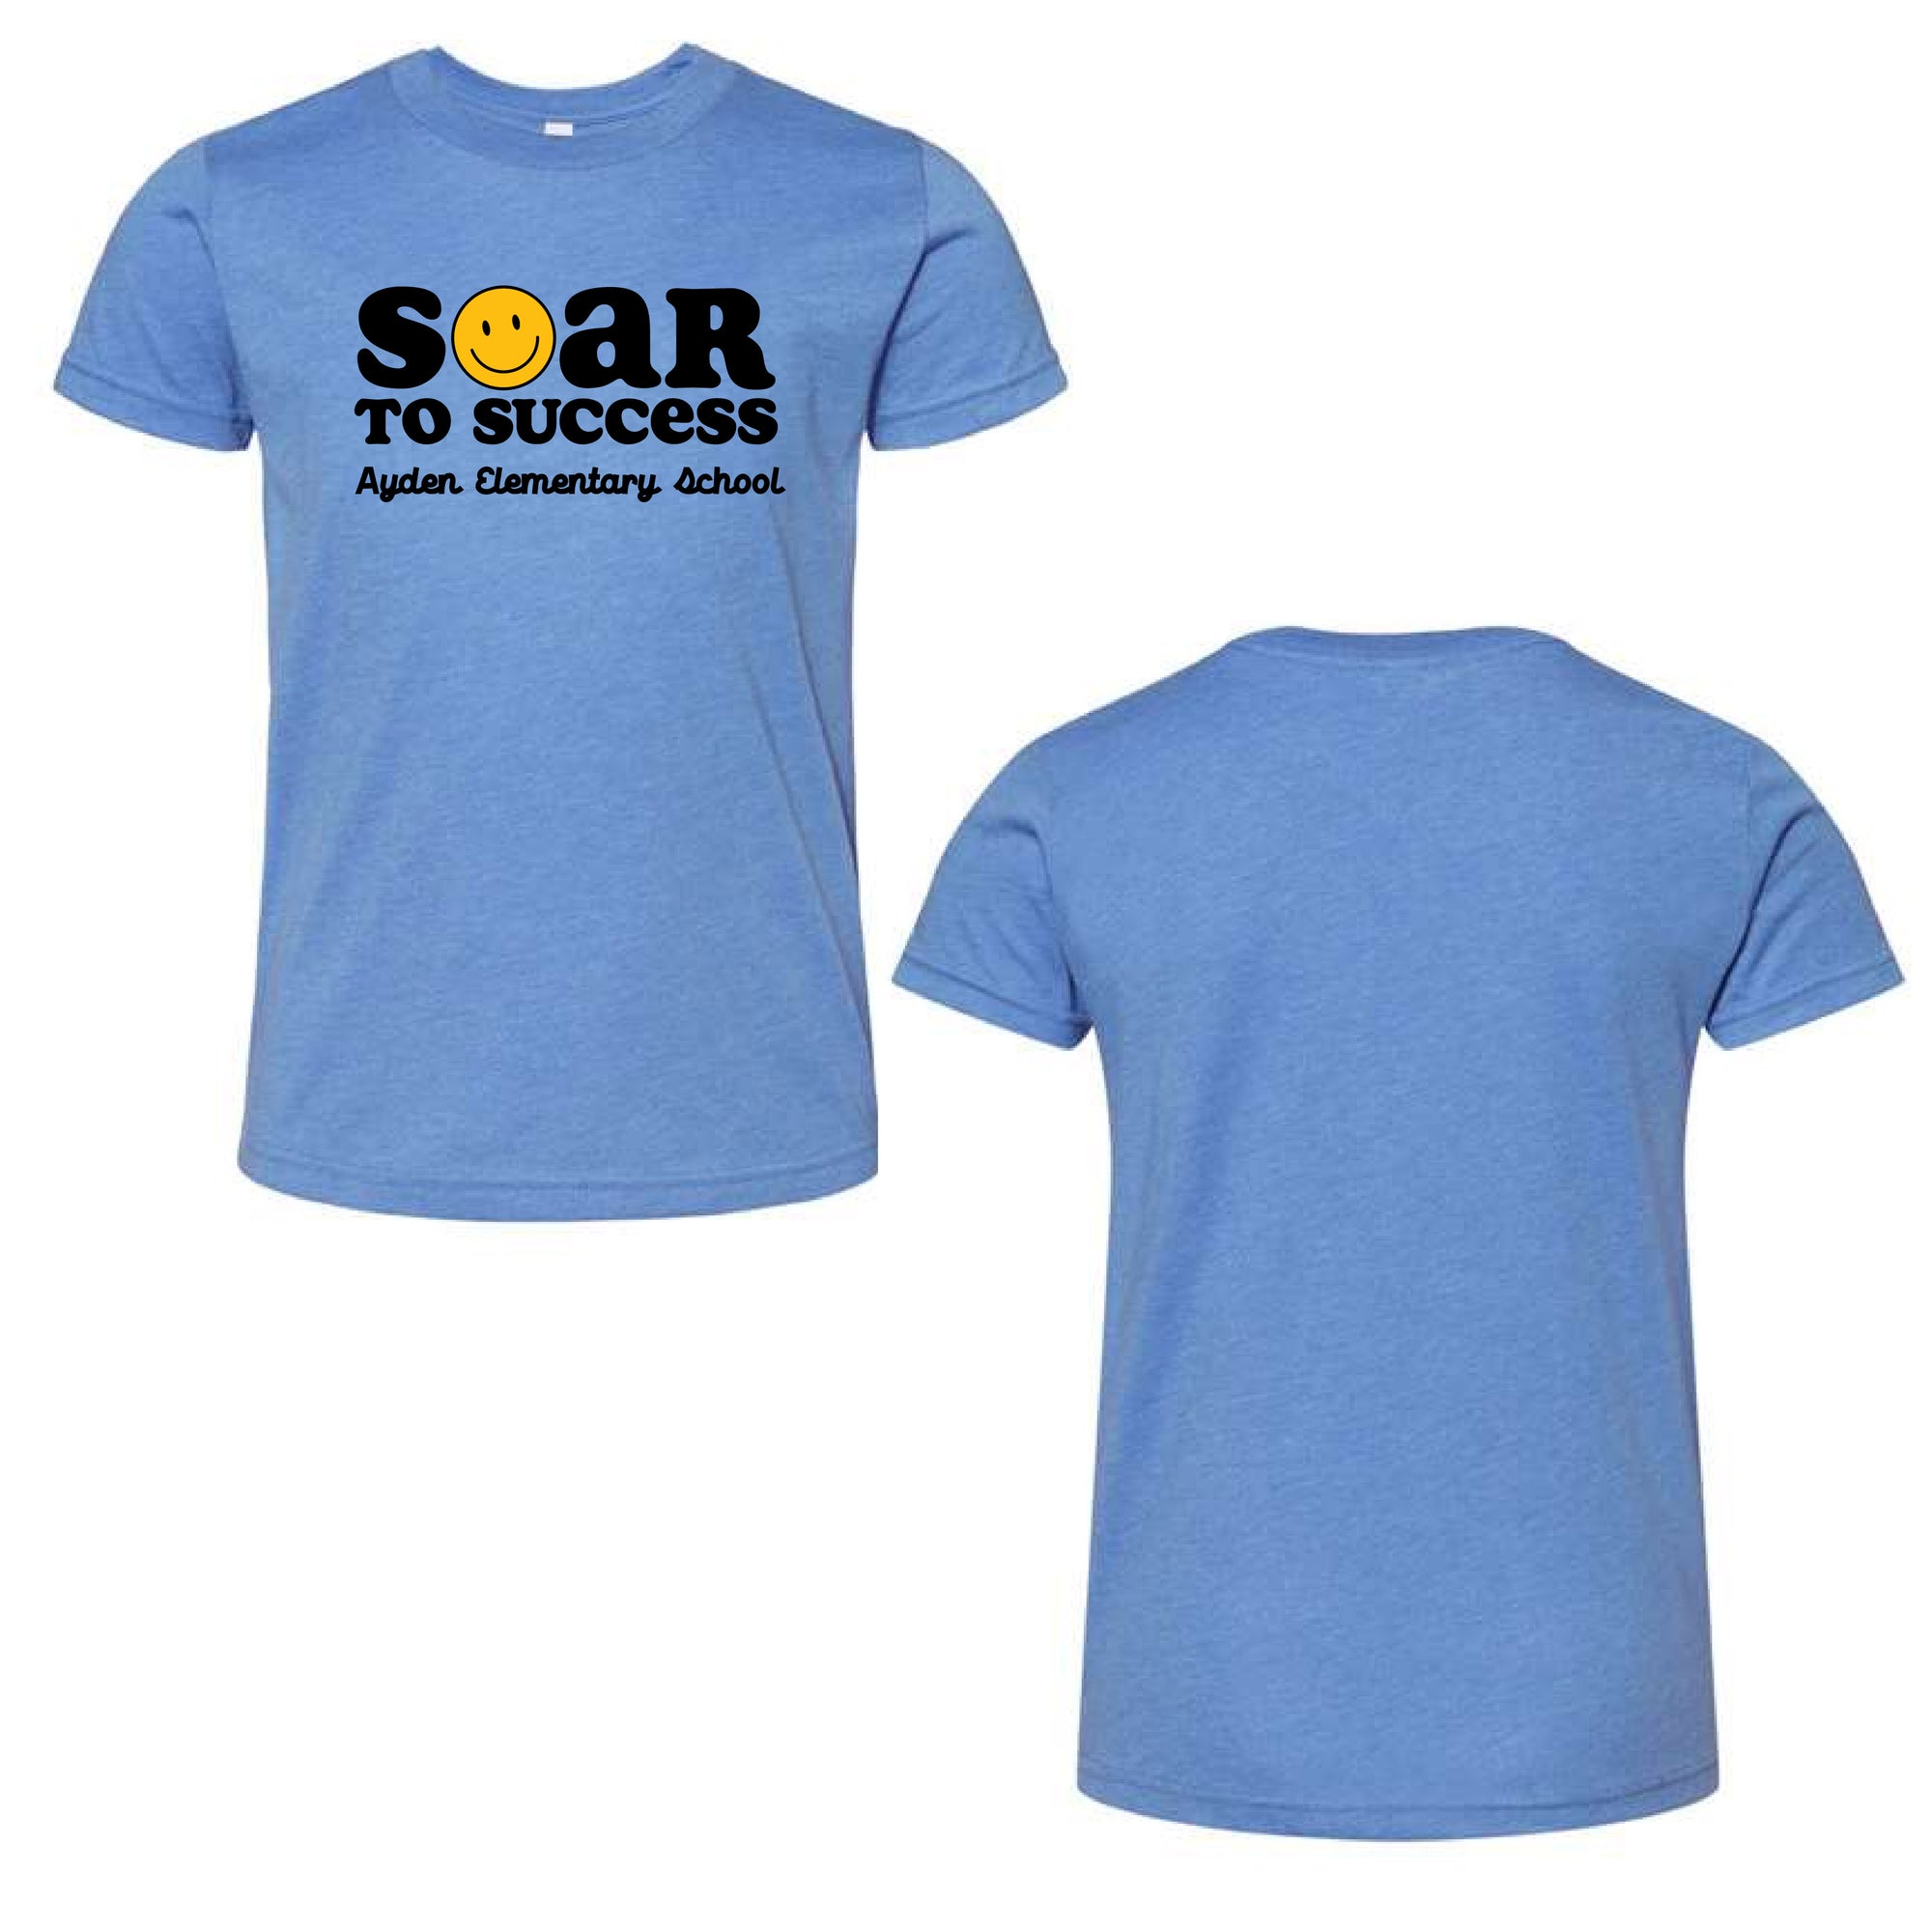 Soar to Success Short Sleeve Shirt - Ayden Elementary